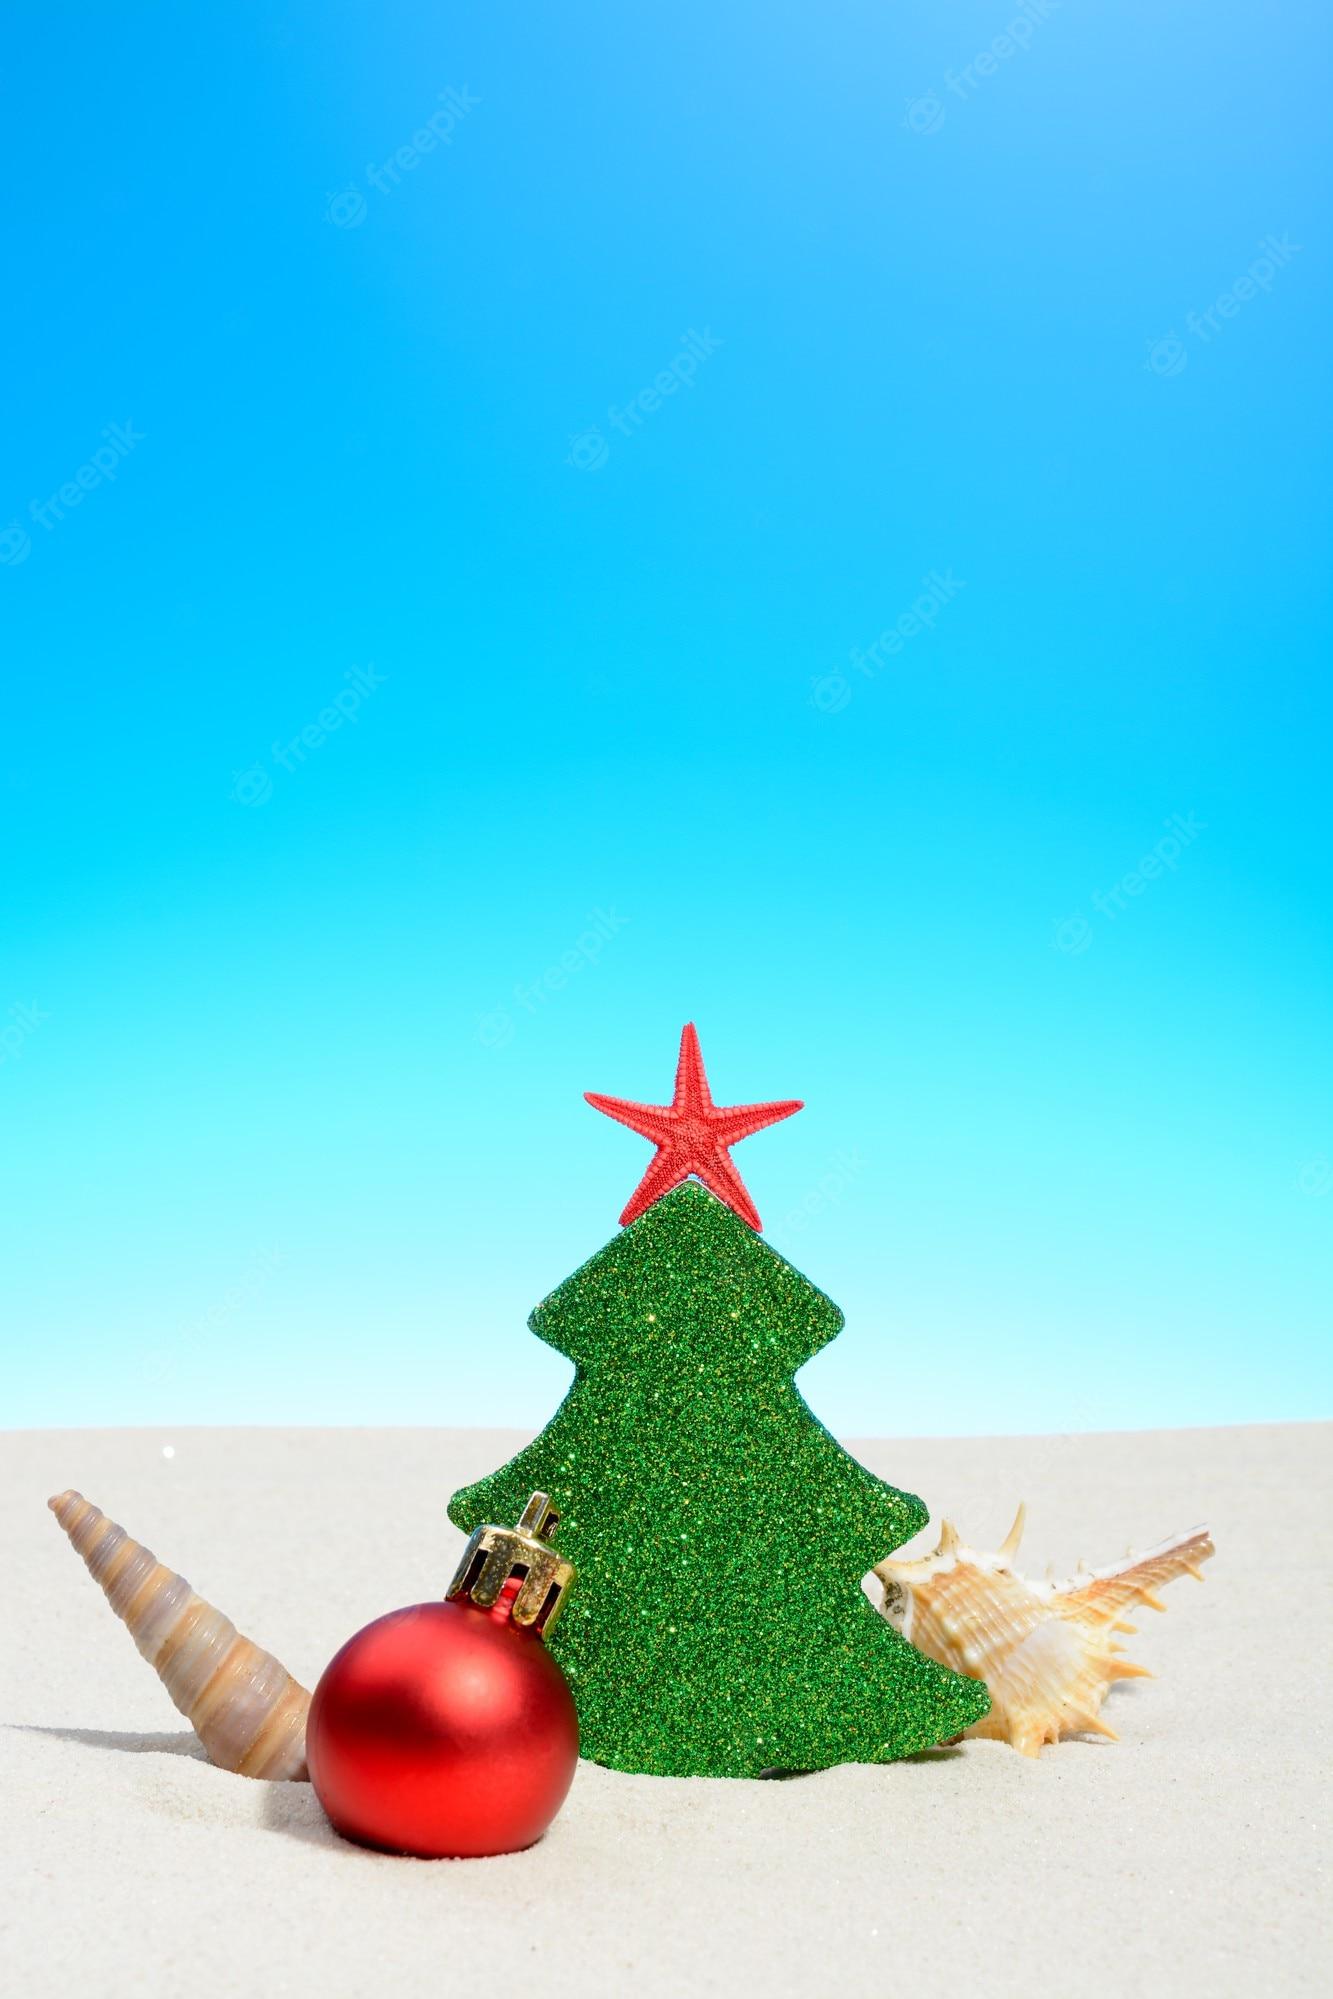 Premium Photo Tropical Summer Beach Christmas With A Xmas Tree